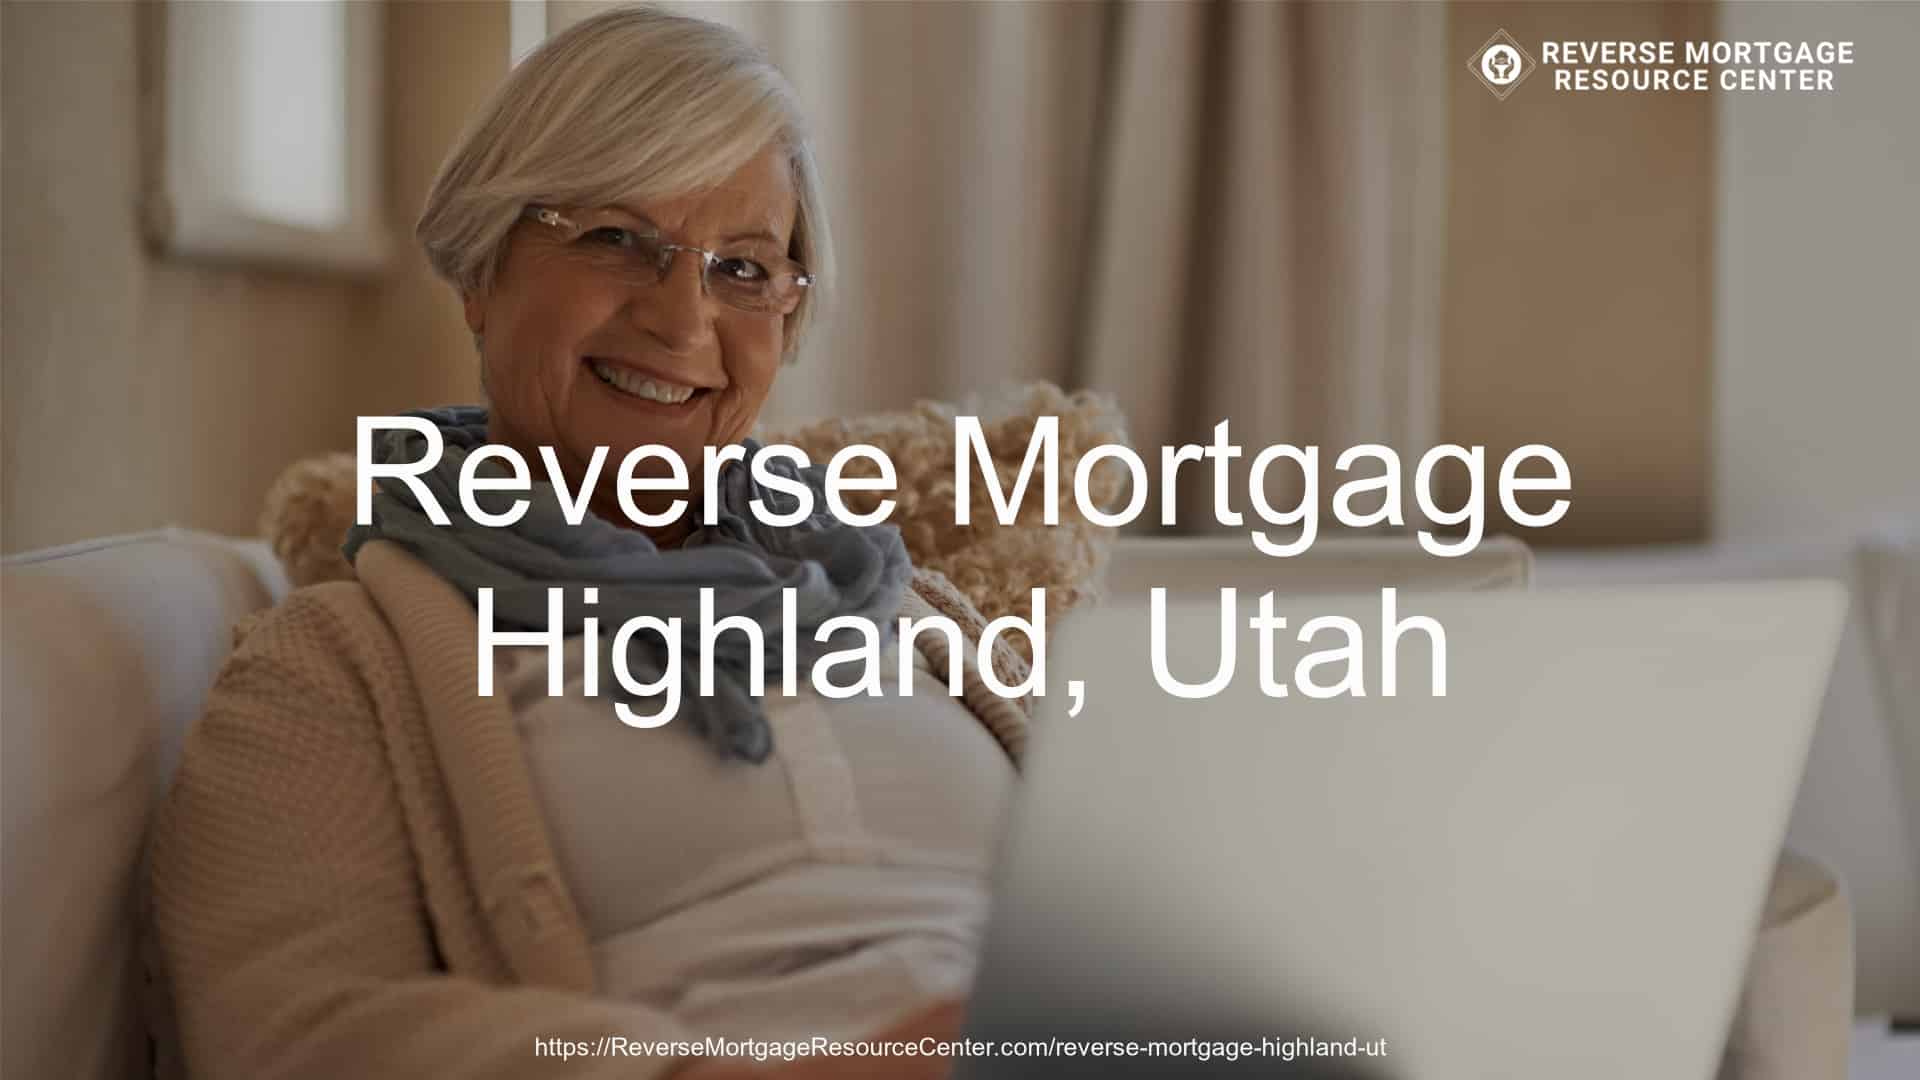 Reverse Mortgage Loans in Highland Utah